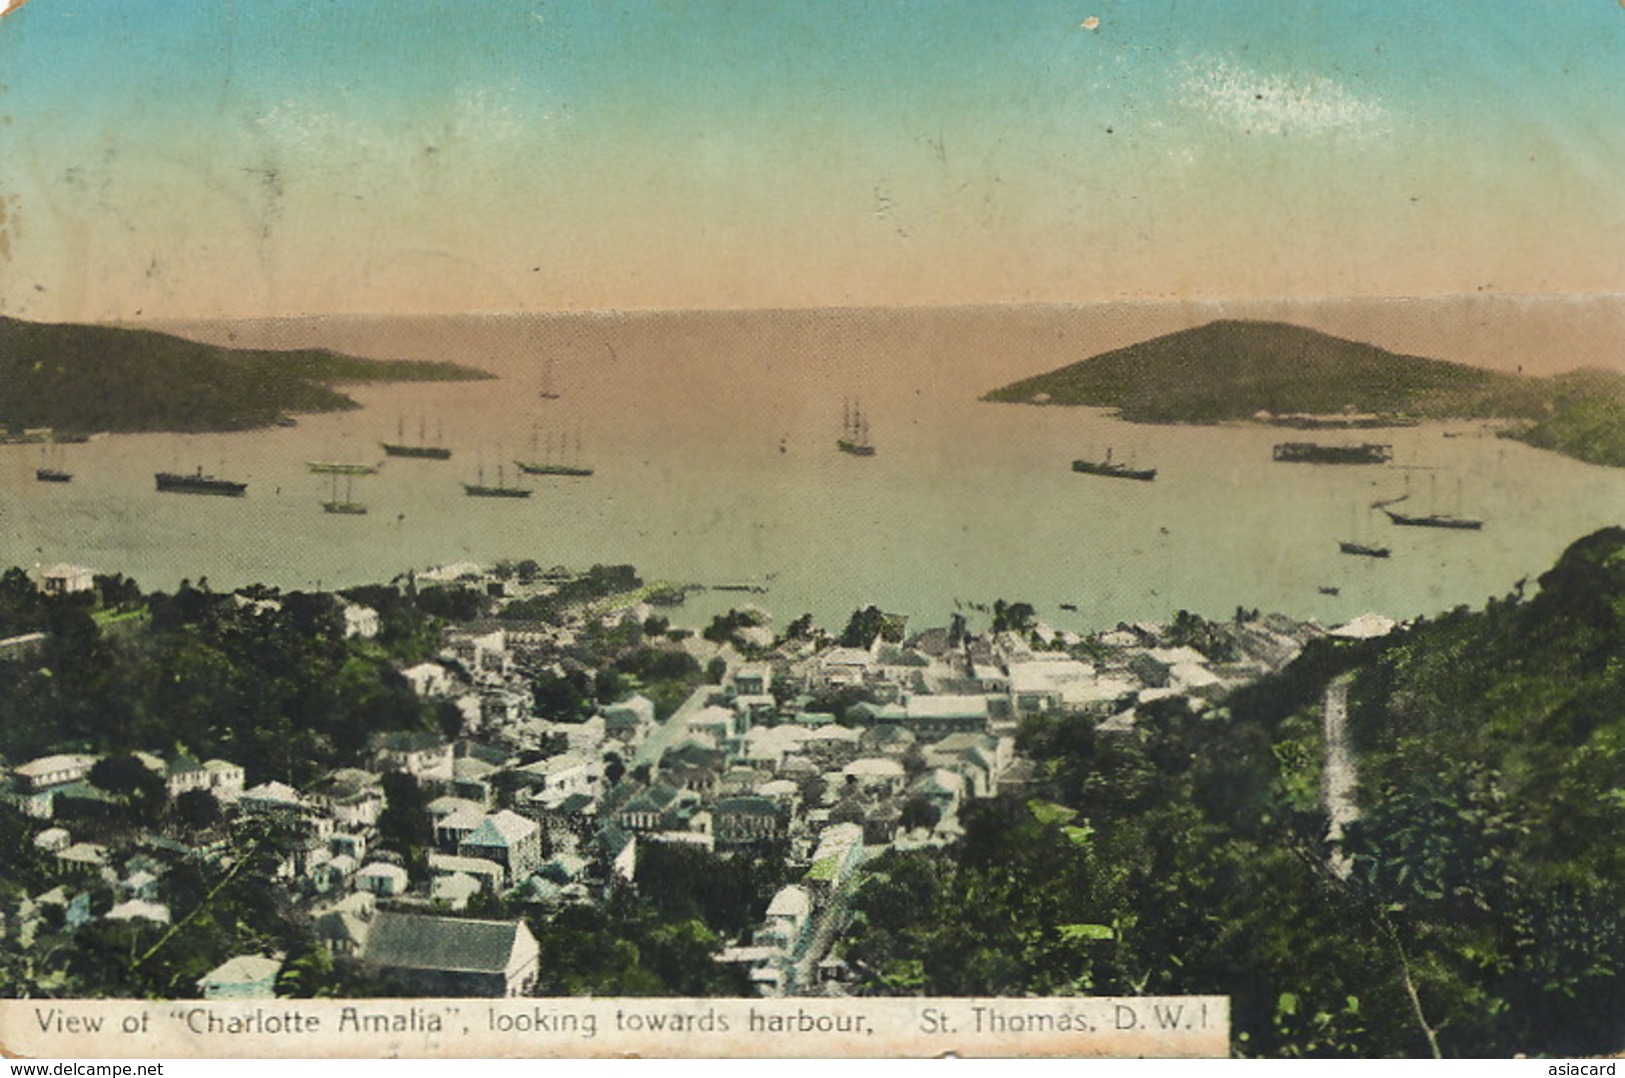 View Of " Charlotte Amalia " Looking Towards Harbour St Thomas D.W.I. Taylor P. Used To Jacmel Haiti 1912 - Jungferninseln, Amerik.